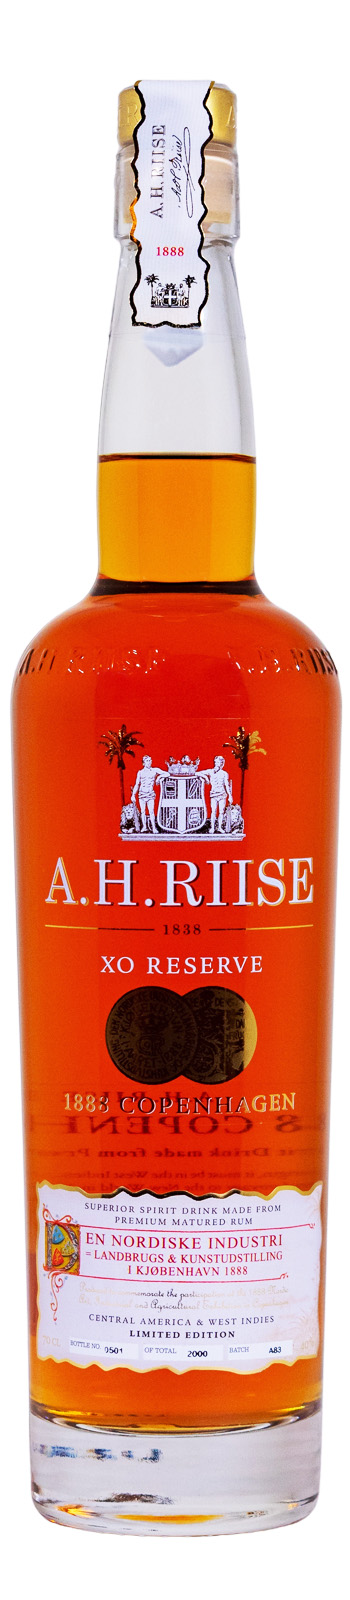 A.H. Riise 1888 Gold Medal Spirituose auf Rum-Basis - 0,7L 40% vol